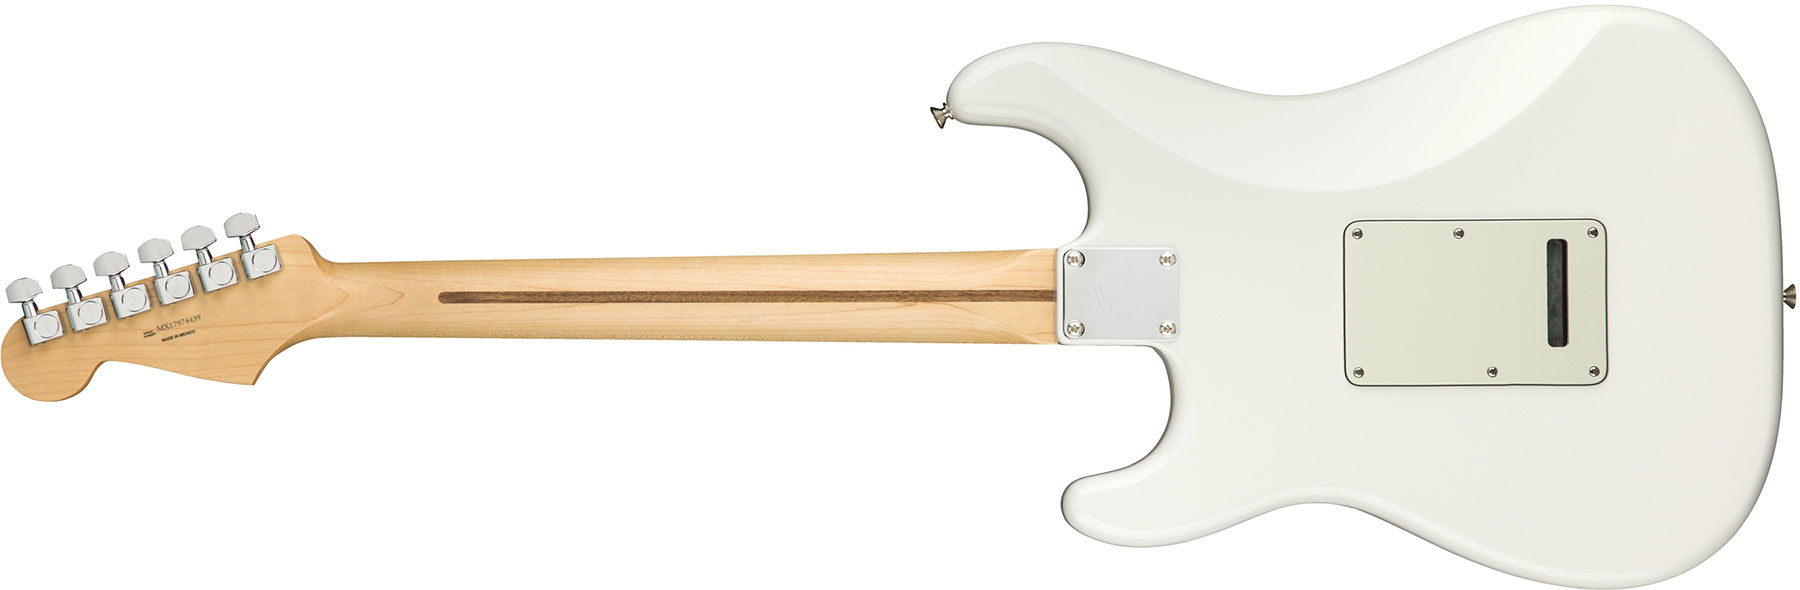 Fender Strat Player Mex Sss Pf - Polar White - Guitare Électrique Forme Str - Variation 1